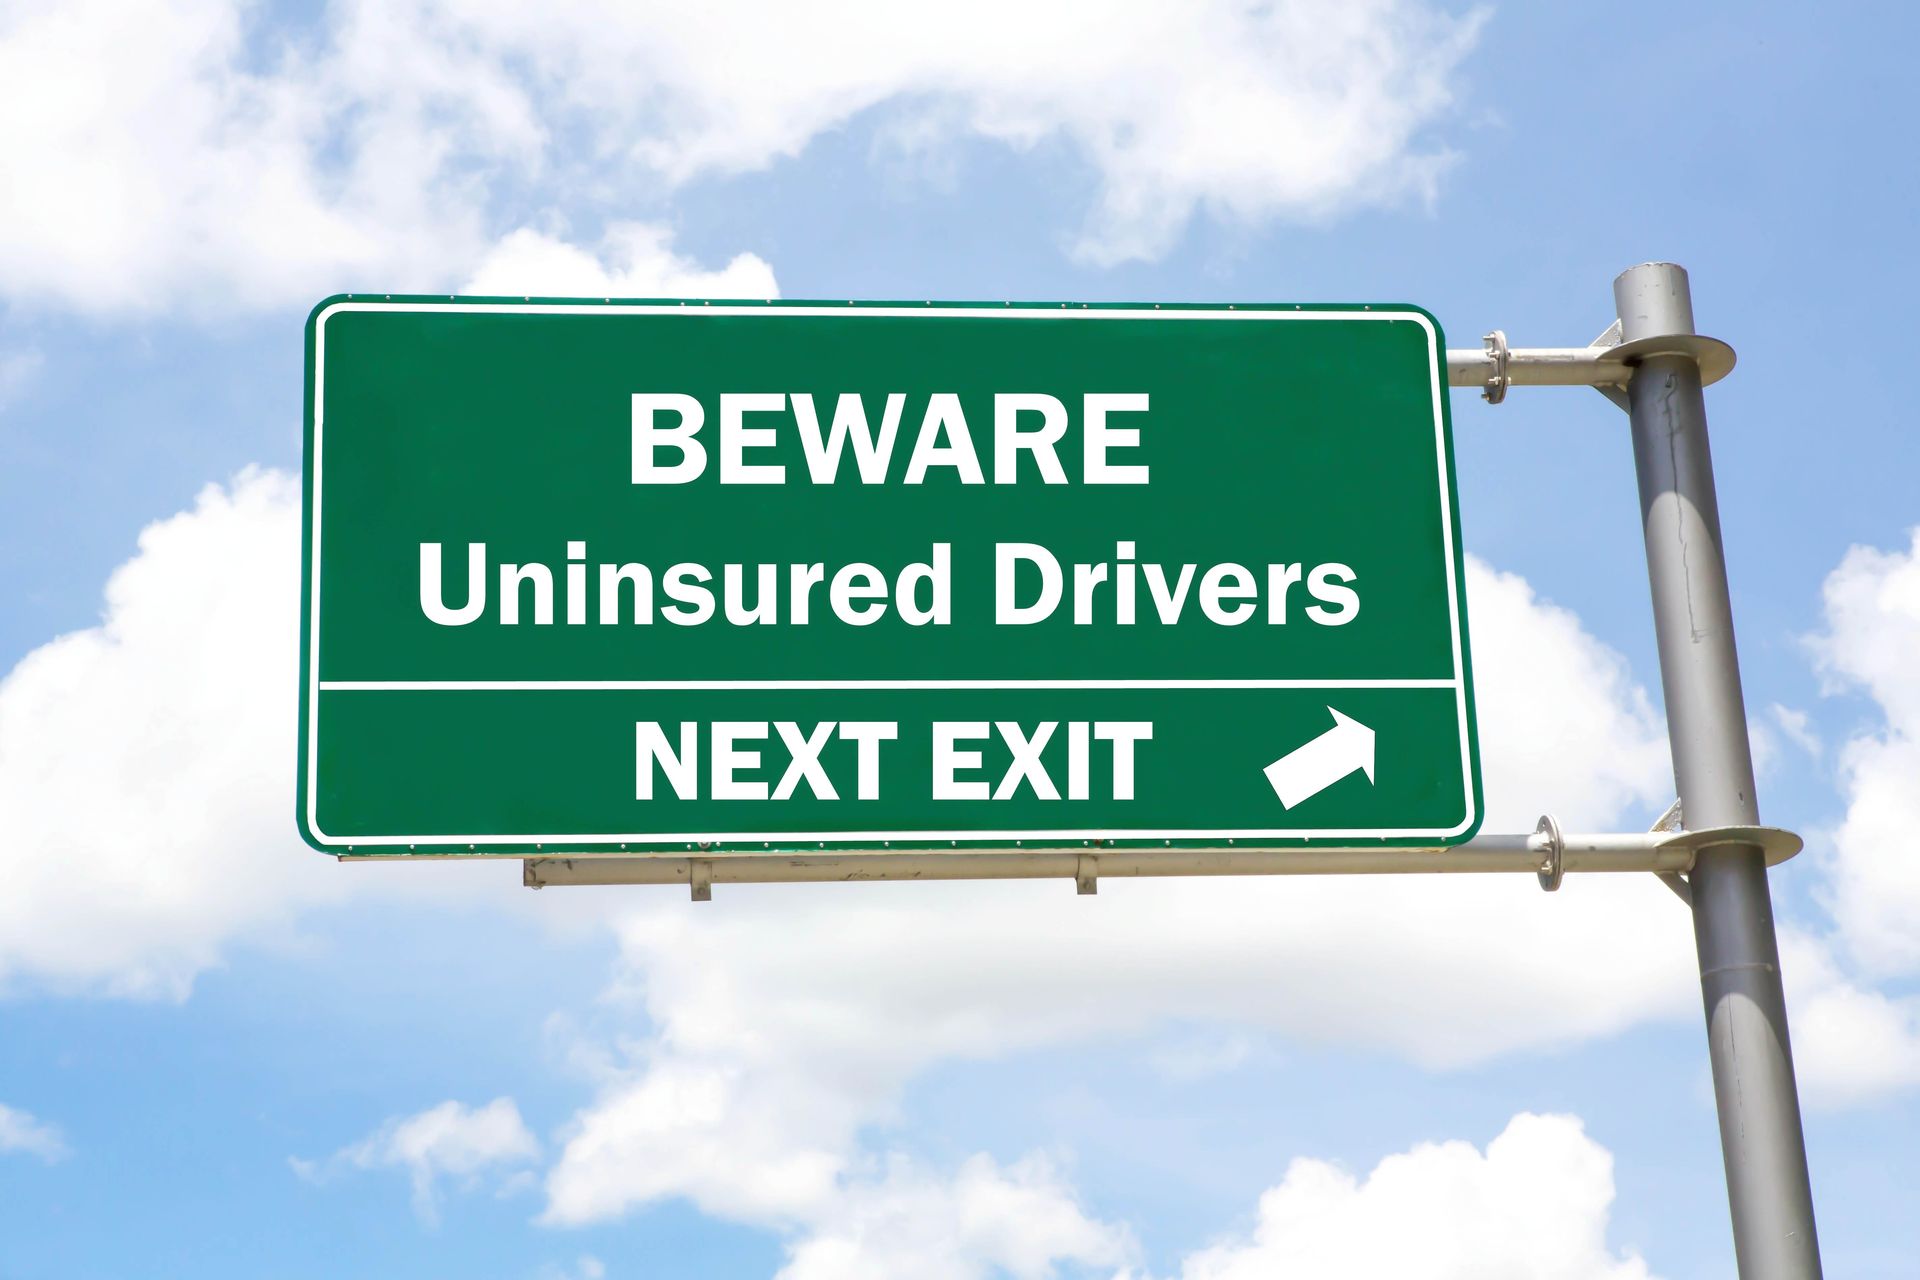 Beware Uninsured Drivers Next Exit